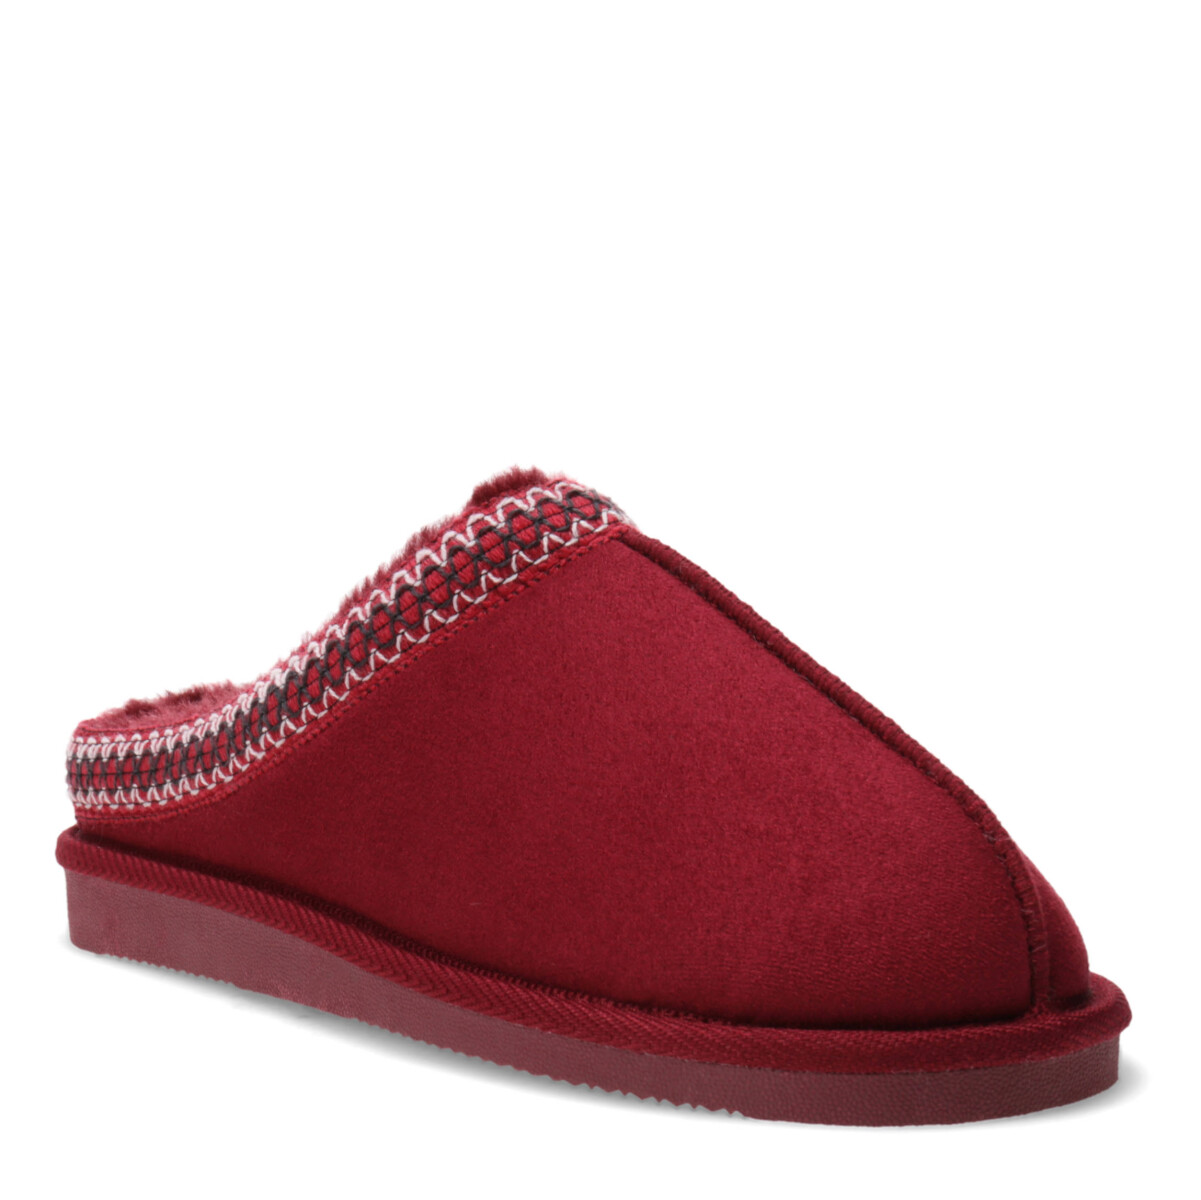 Zapato TORONTO tipo pantufla descalzo Lady Confort - Bordeaux 